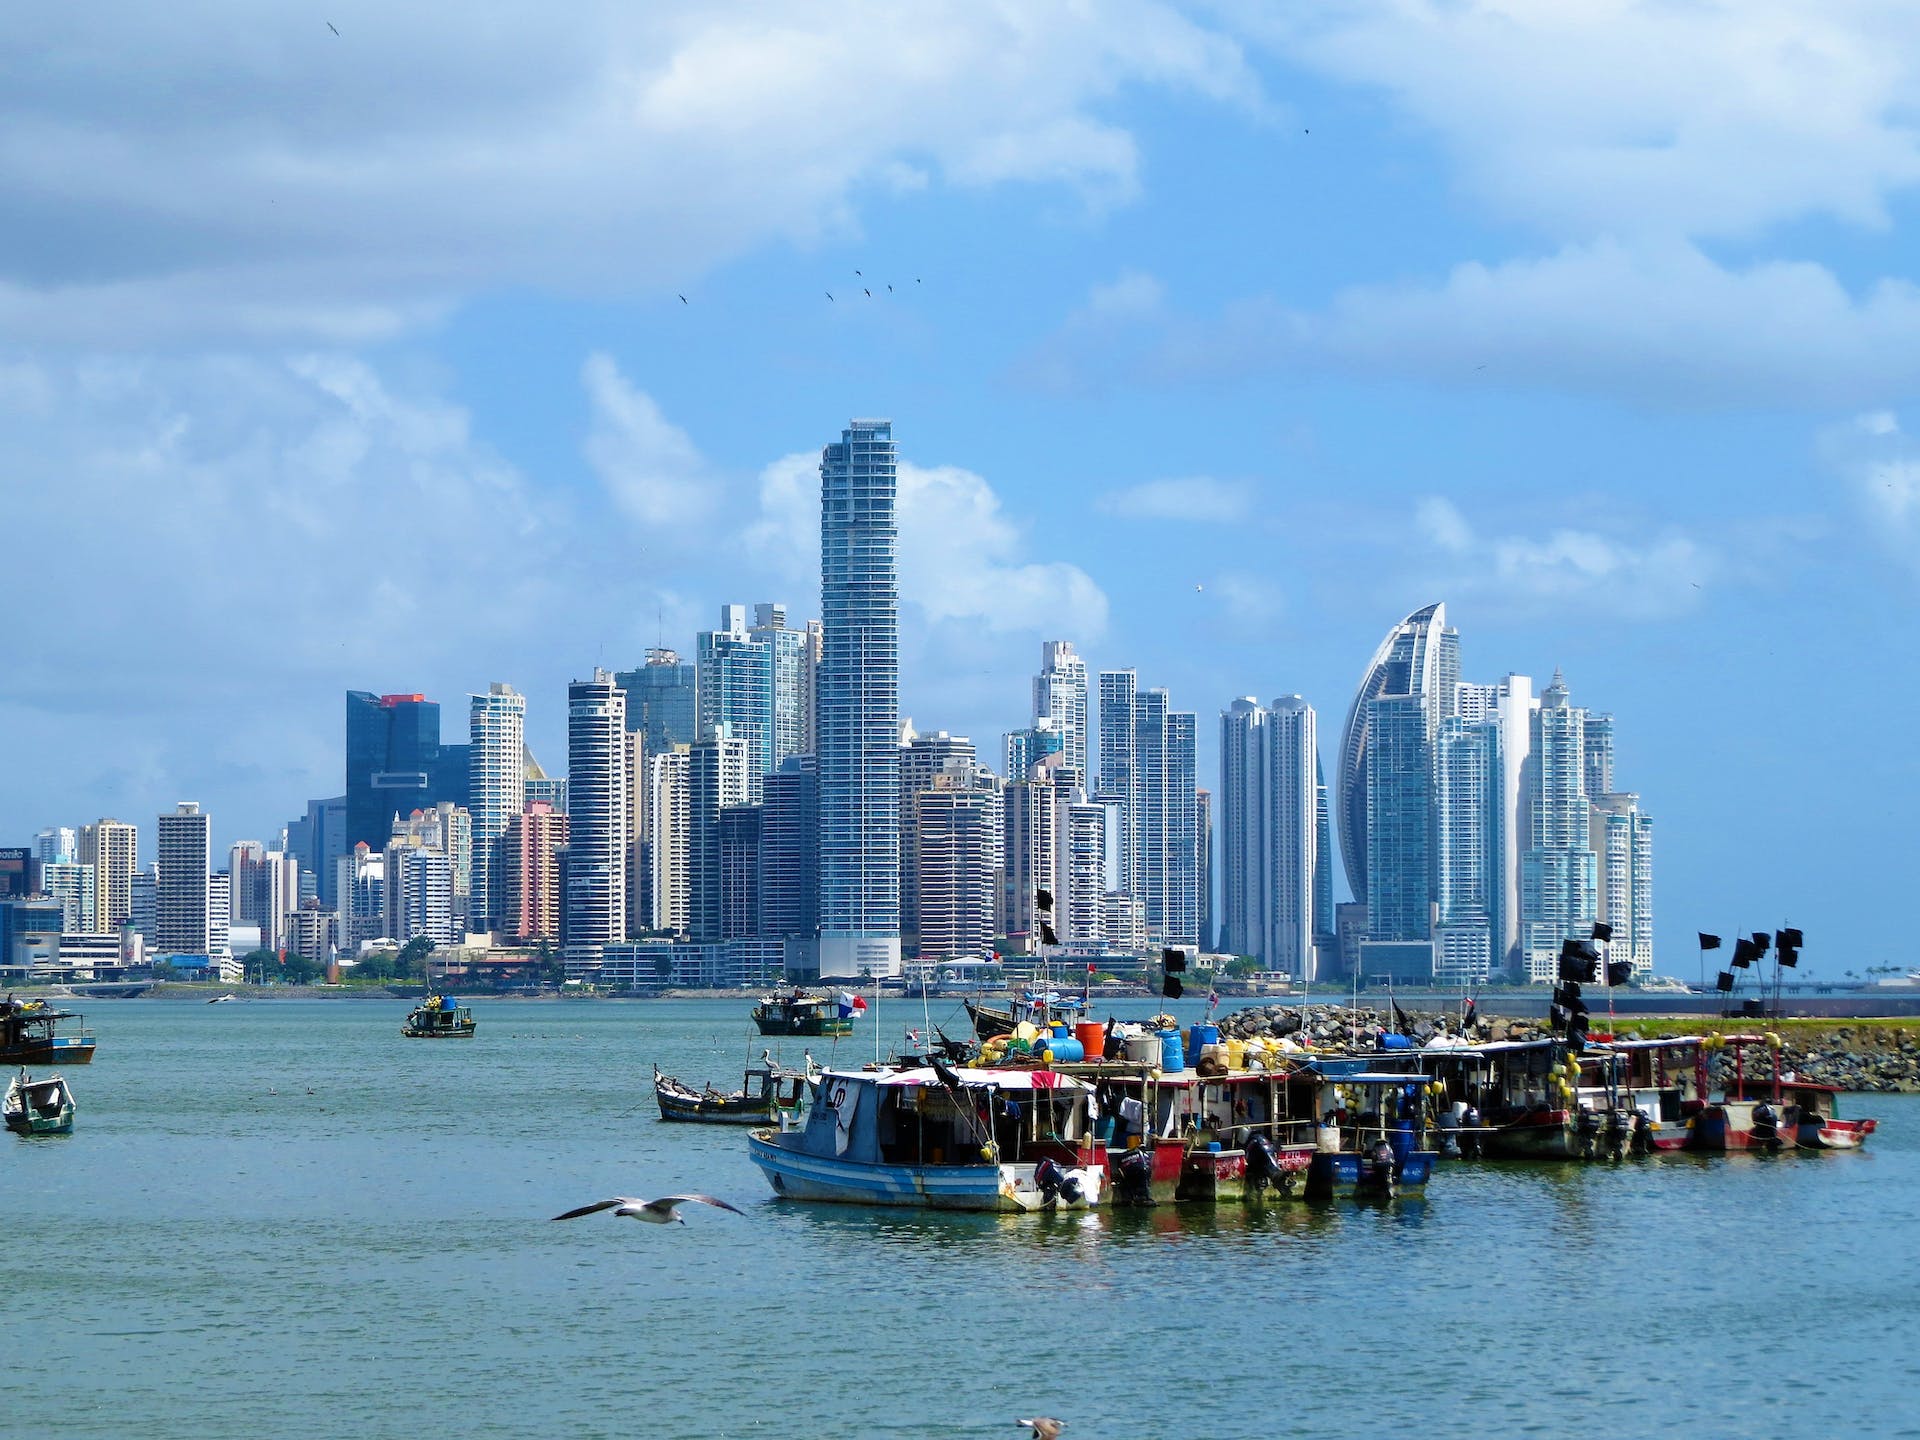 Scenic image of Panama